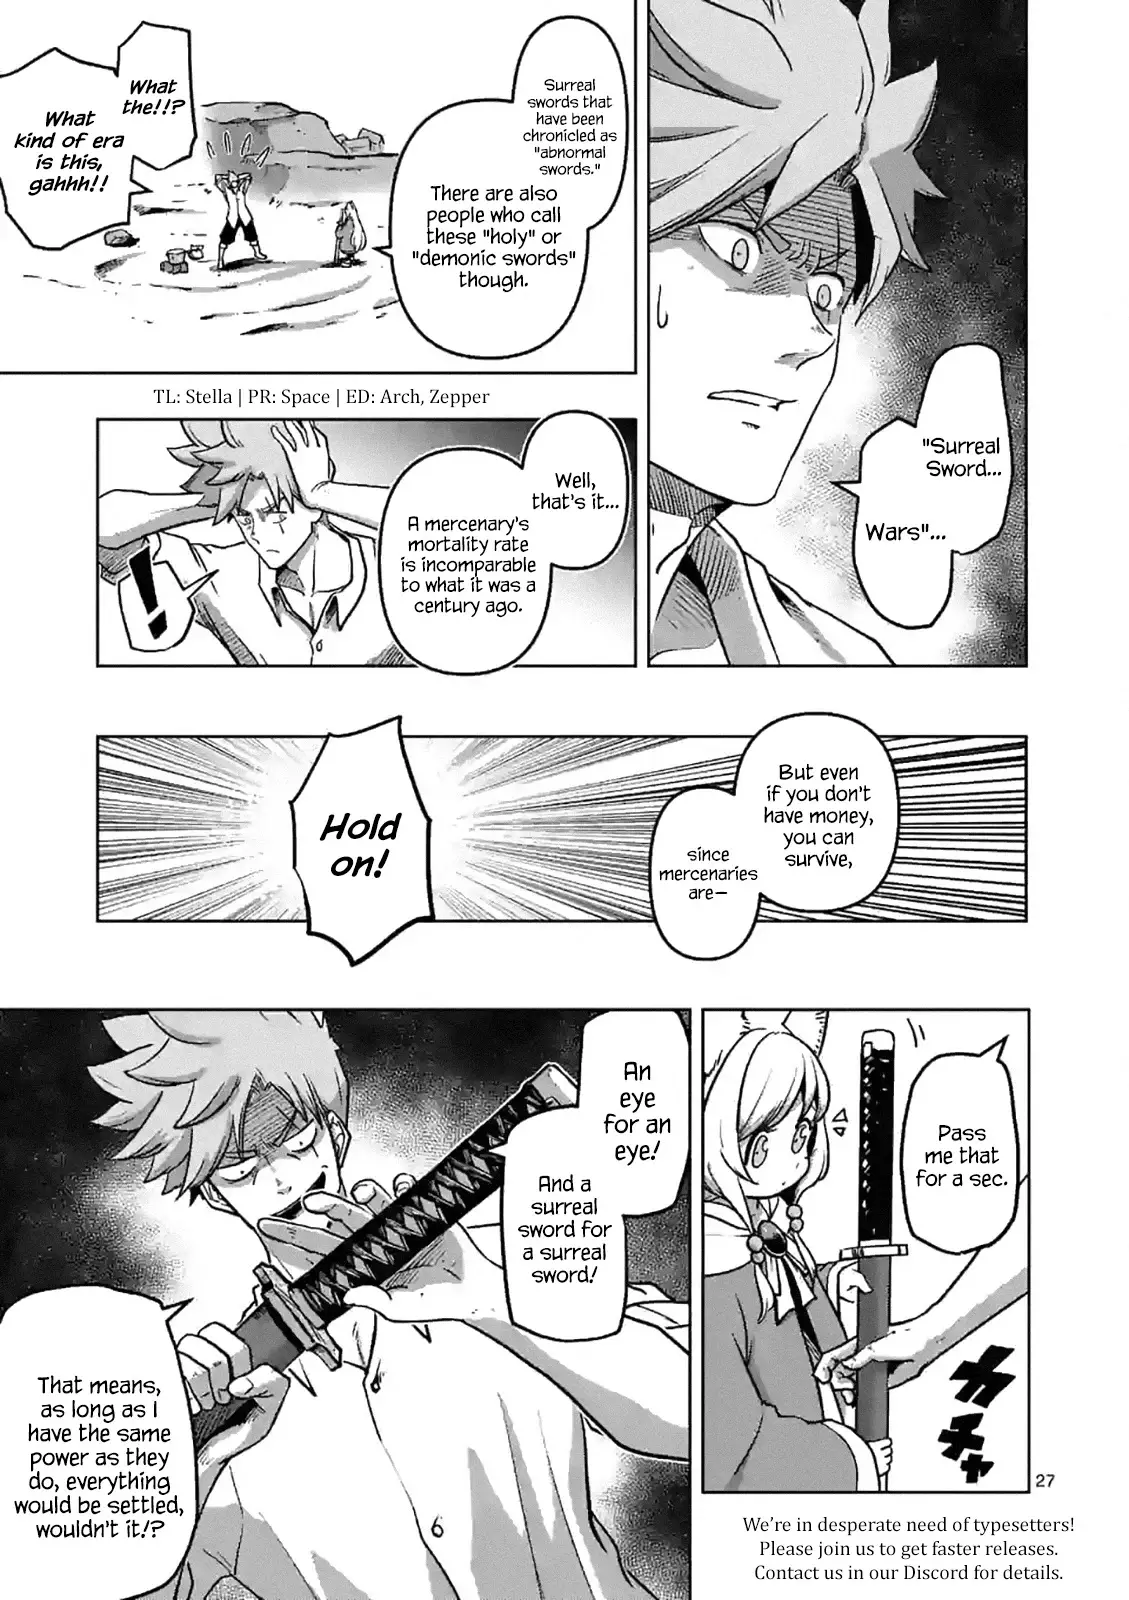 Verndio - Surreal Sword Saga - 1 page 27